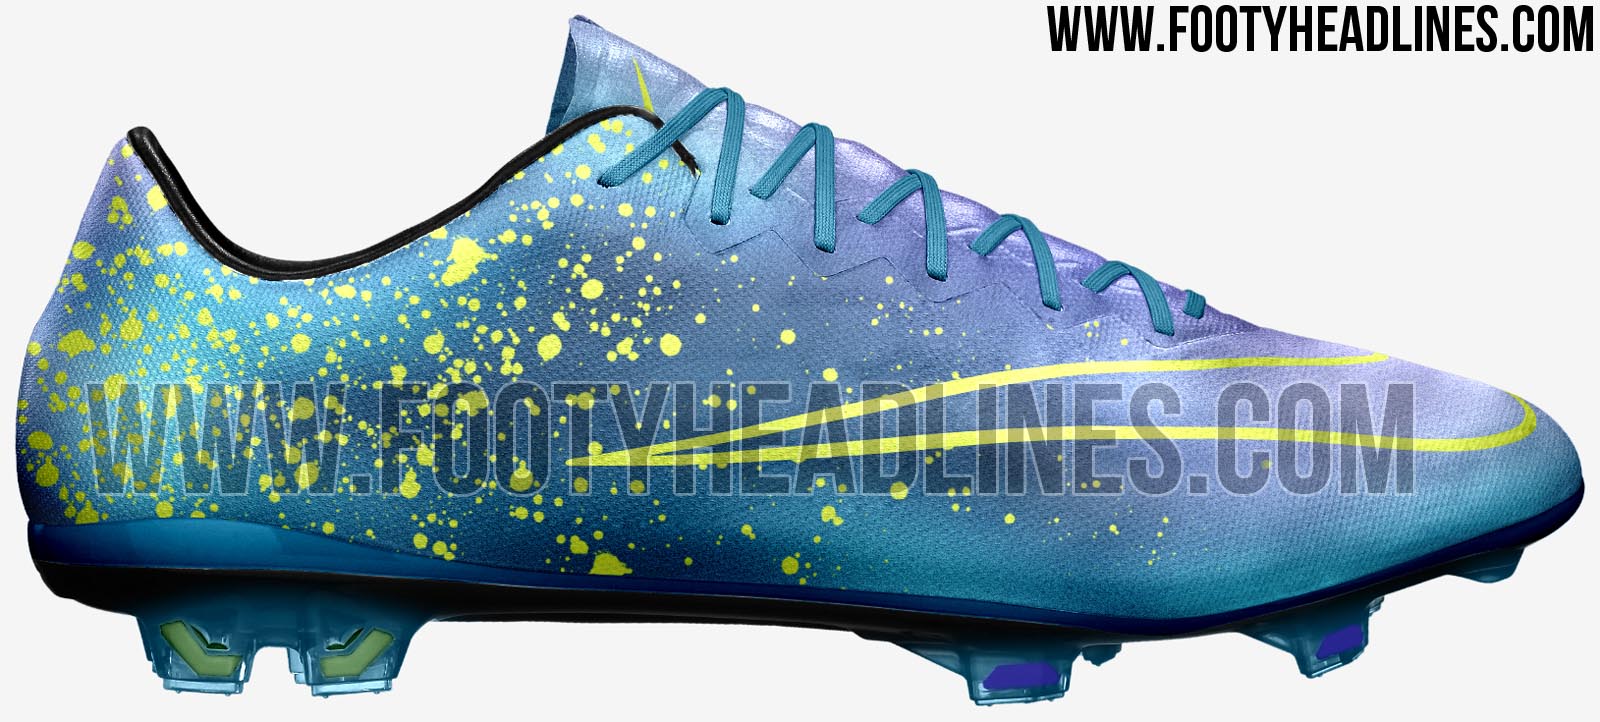 Blue Nike Mercurial Vapor X 2015 2016 Boots Leaked   Footy Headlines  new nike football boots 2016